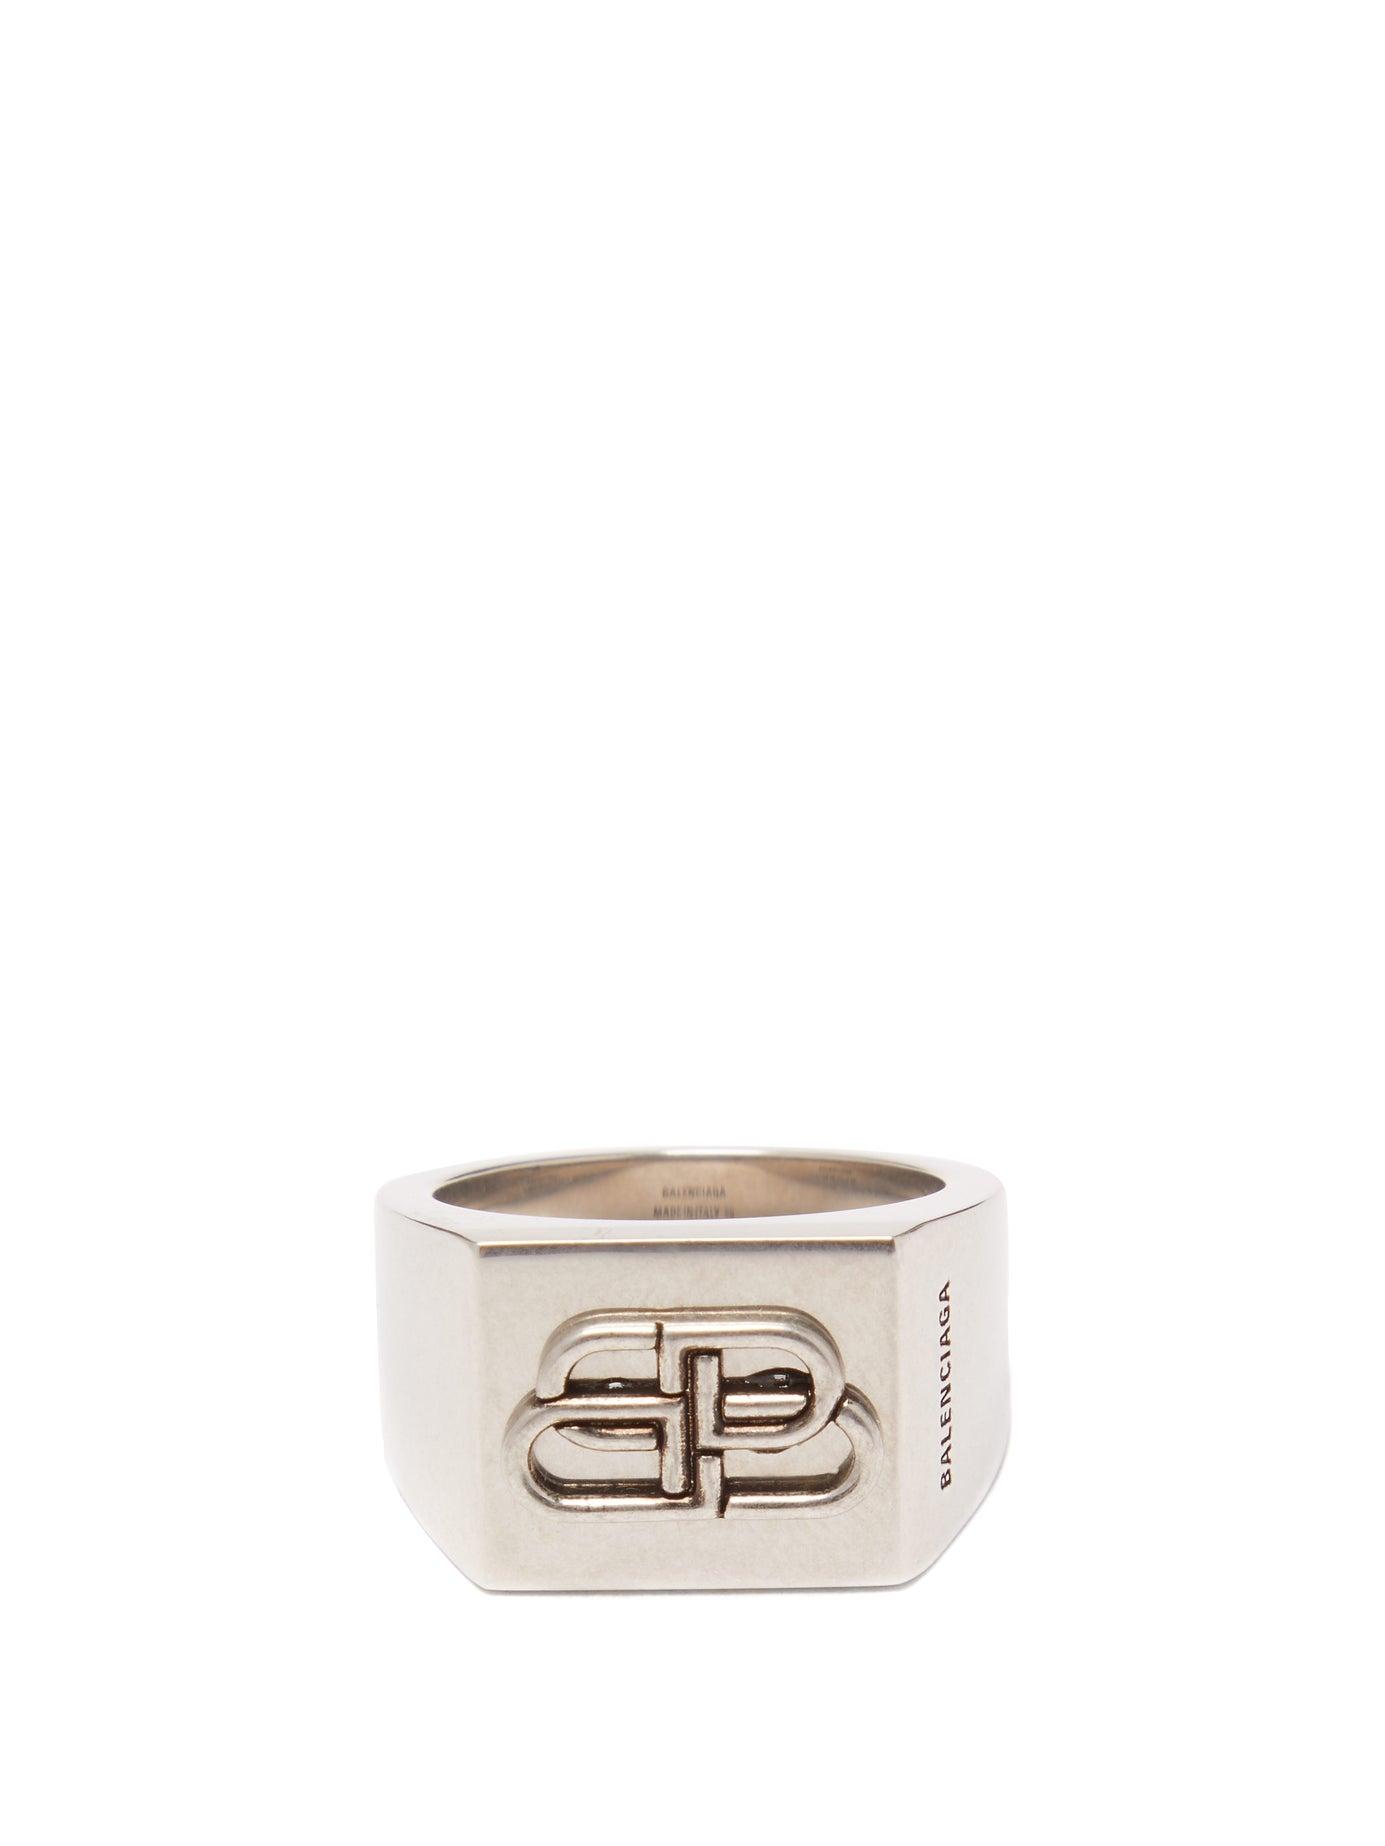 Balenciaga Bb-logo Ring in Silver (Metallic) for Men | Lyst